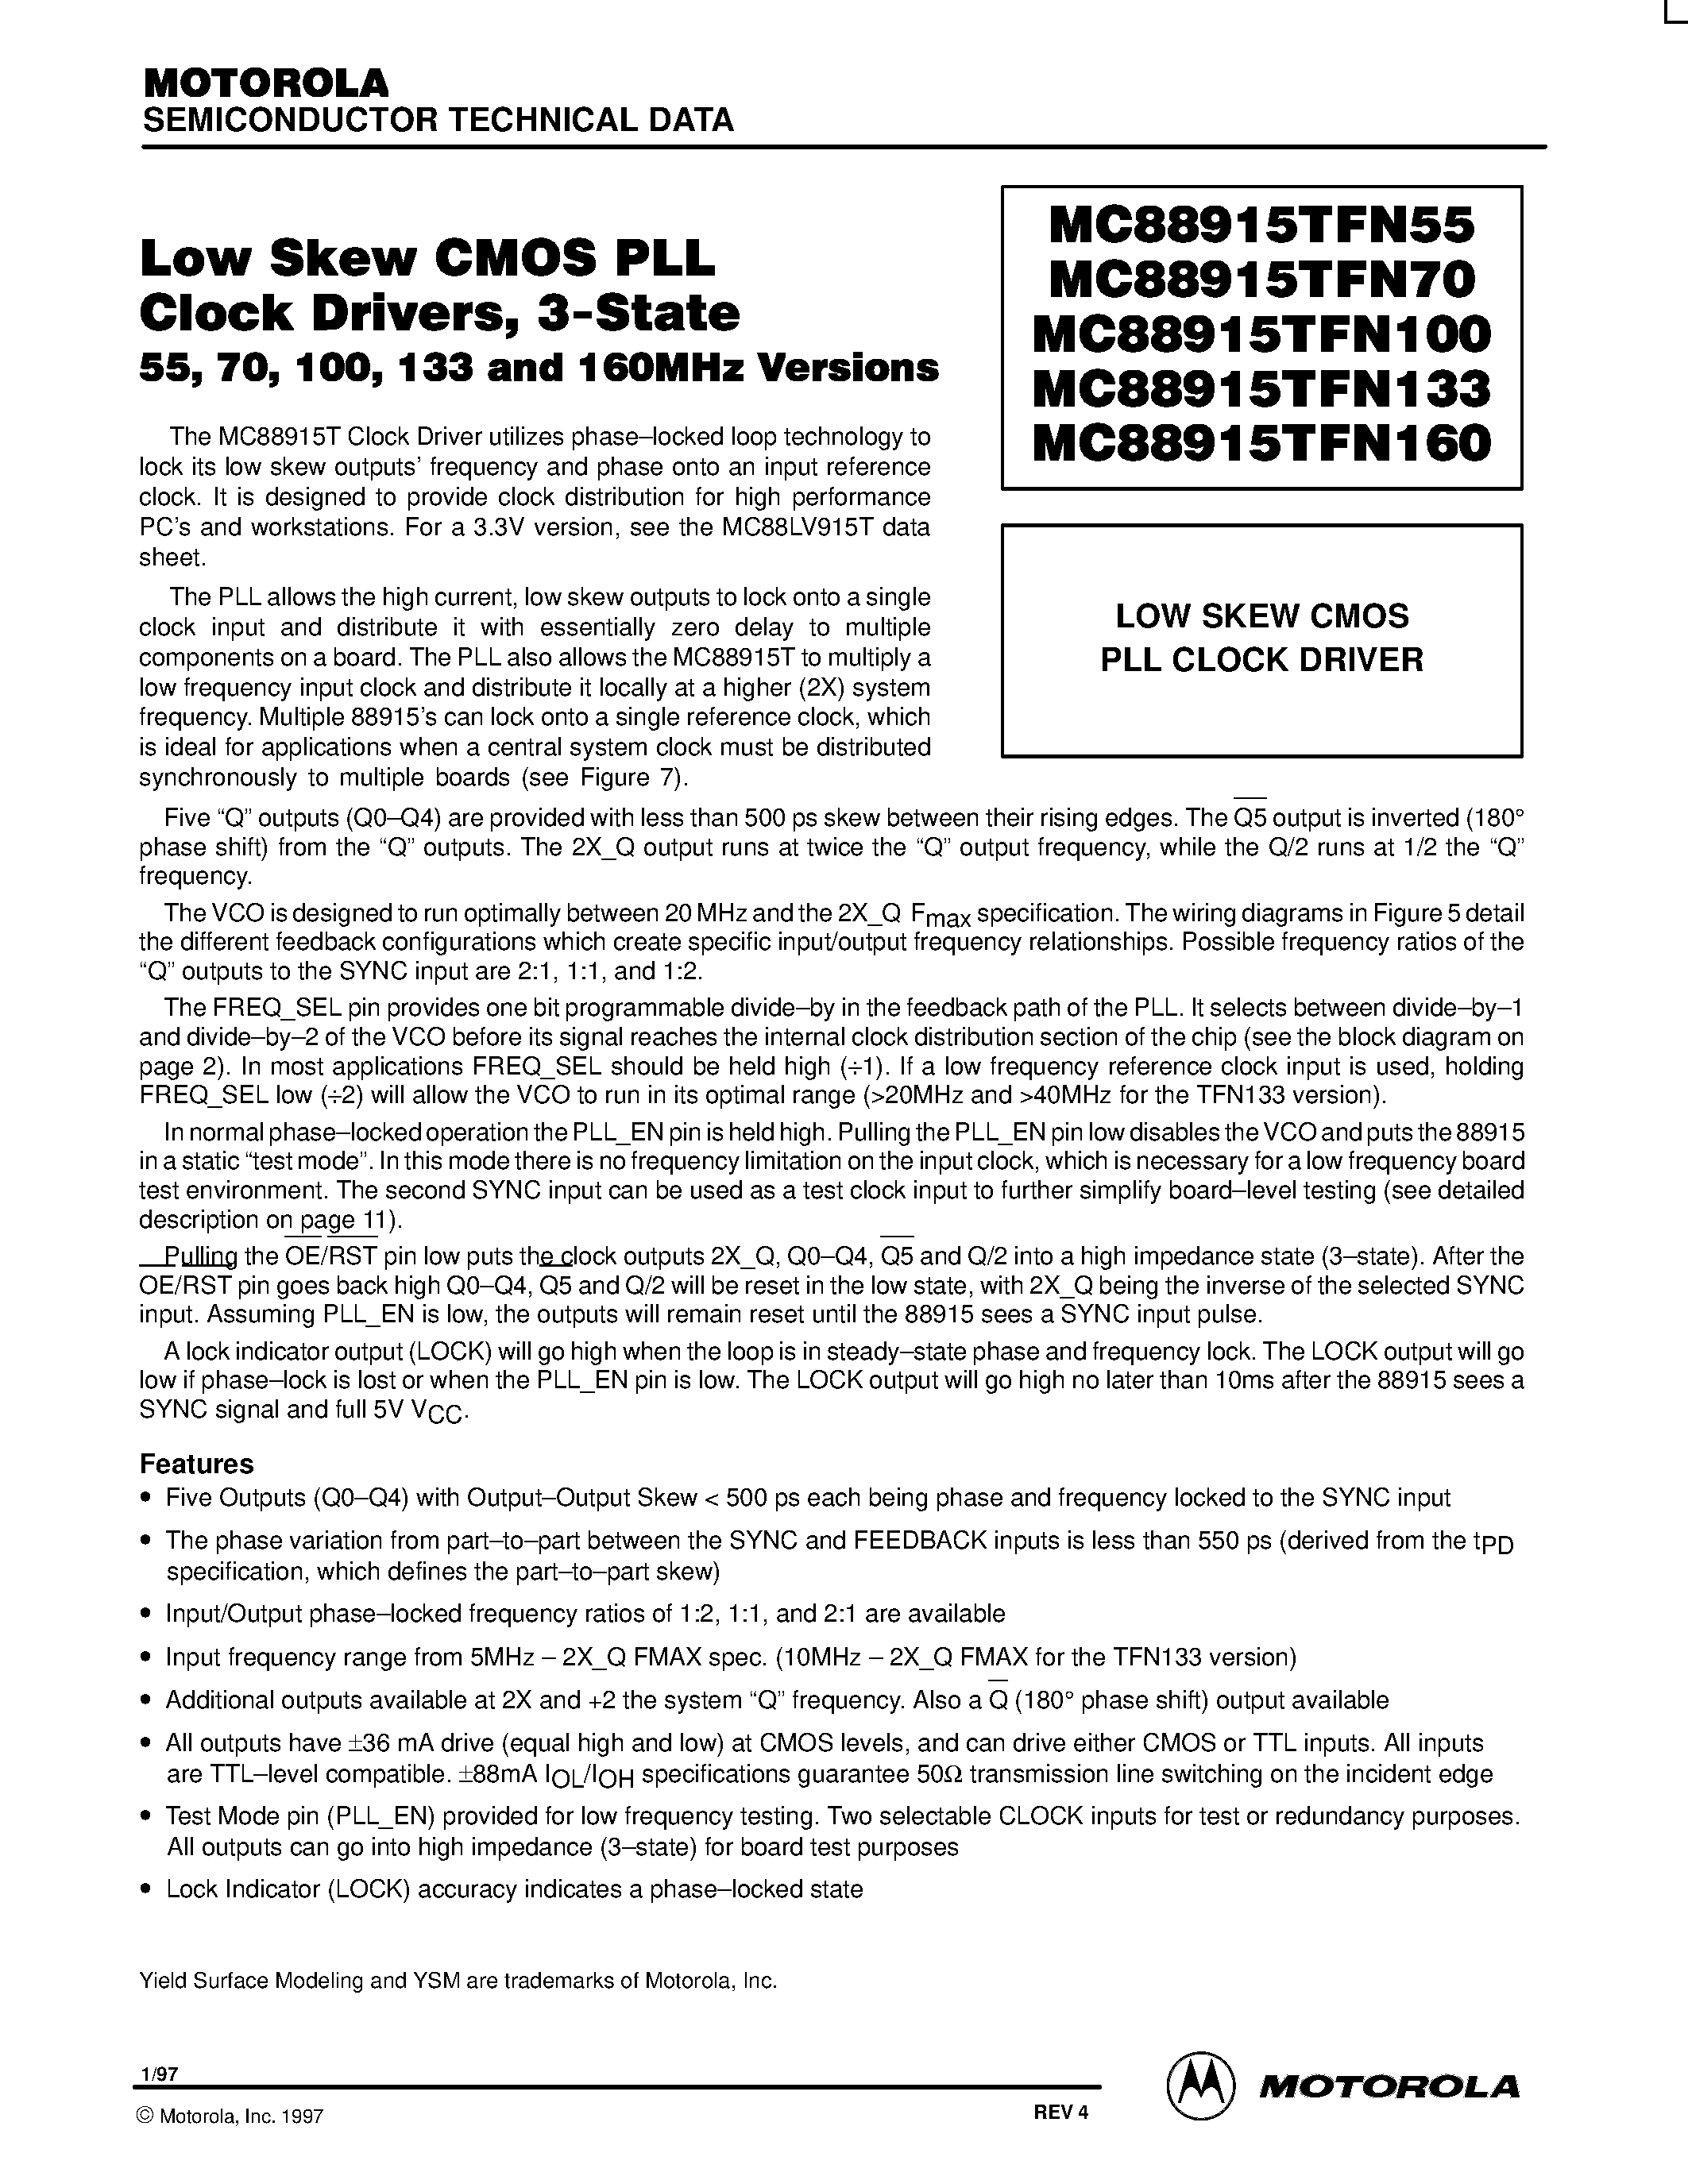 Datasheet MC88915TFN100 - LOW SKEW CMOS PLL CLOCK DRIVER page 1